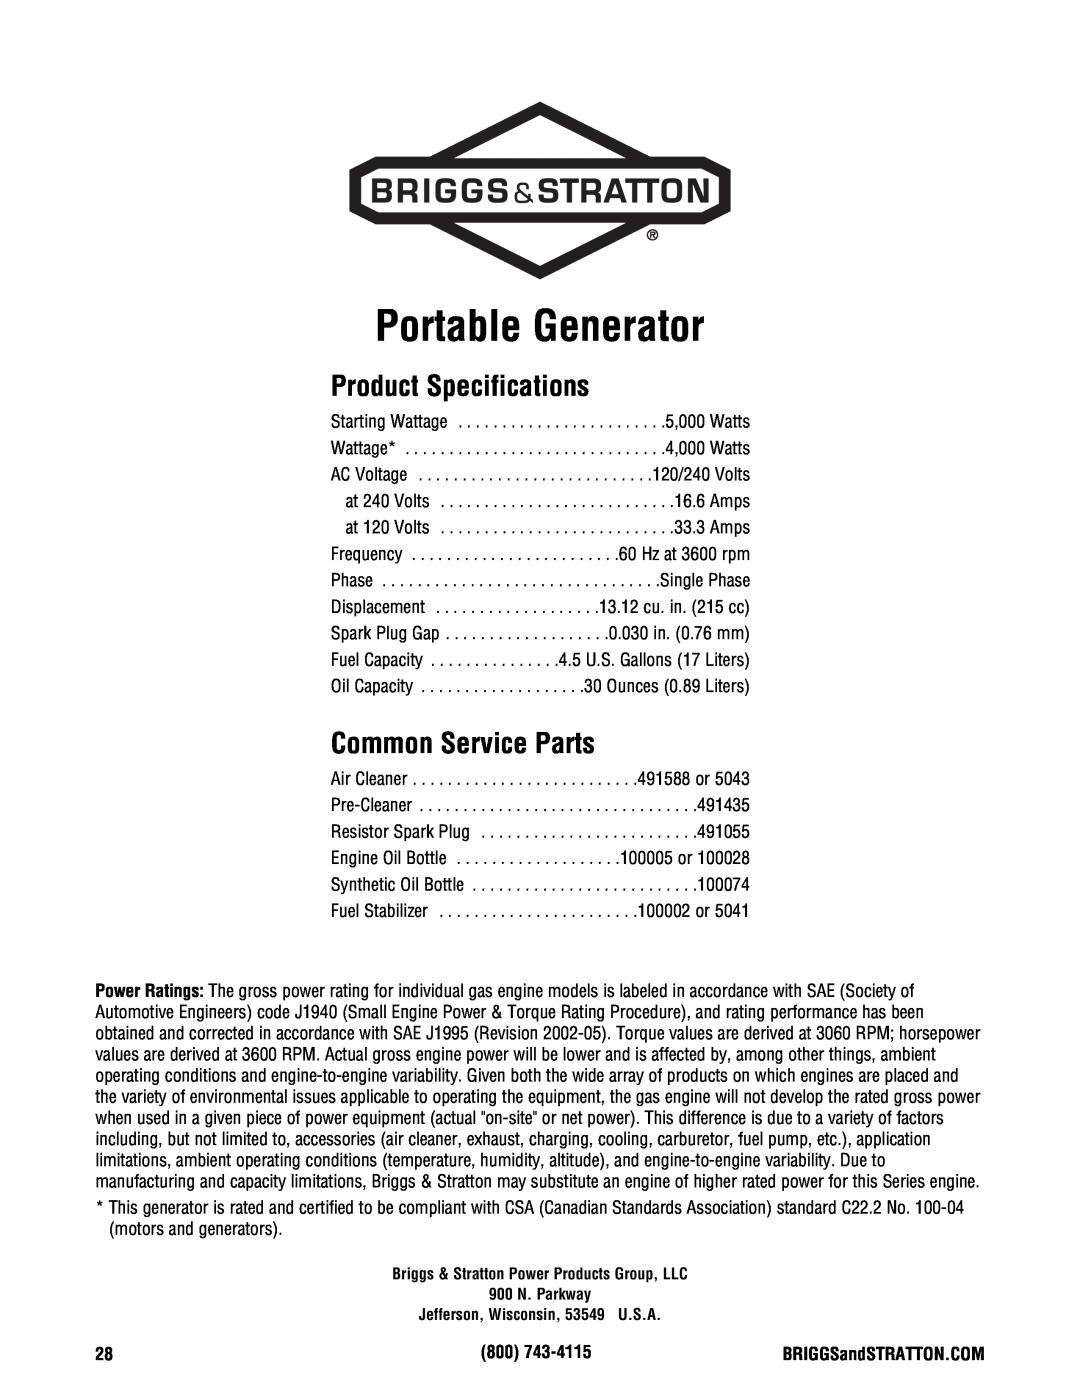 Briggs & Stratton PRO4000 manual Portable Generator, Product Specifications, Common Service Parts 